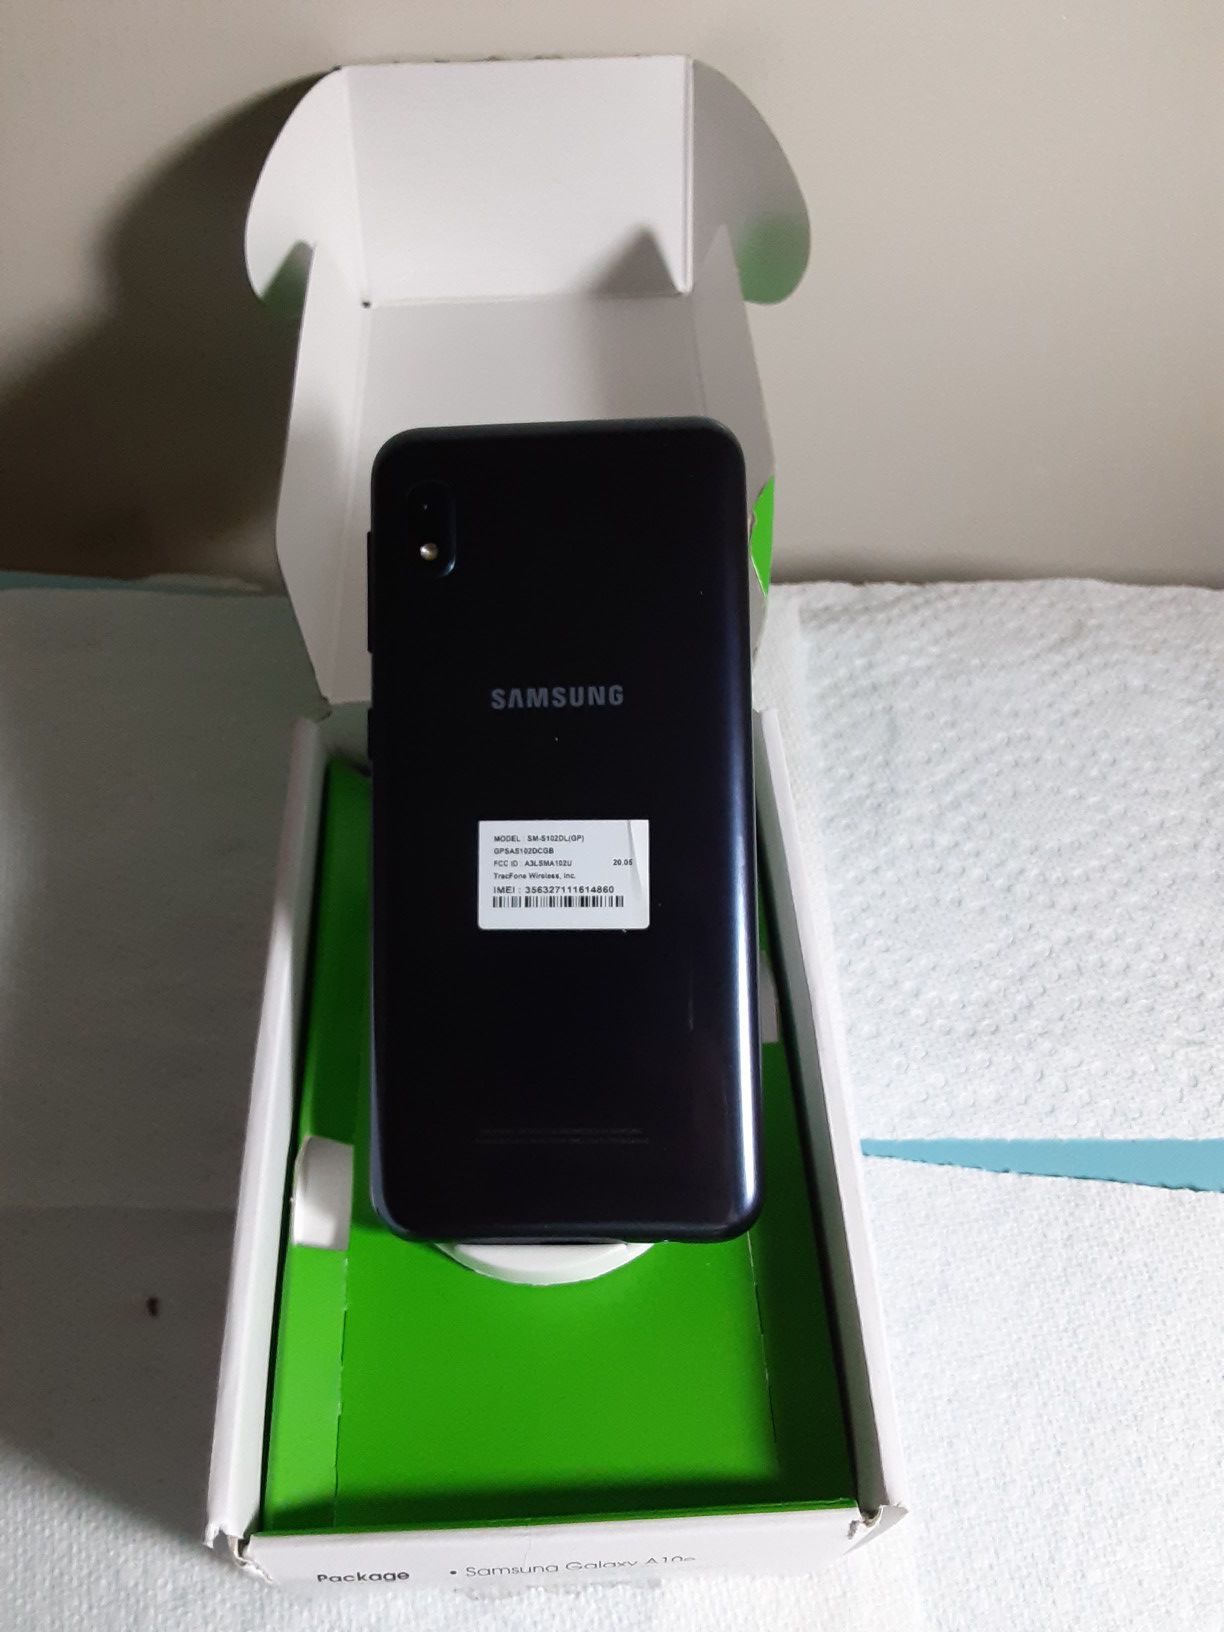 Samsung Galaxy a10e unlocked